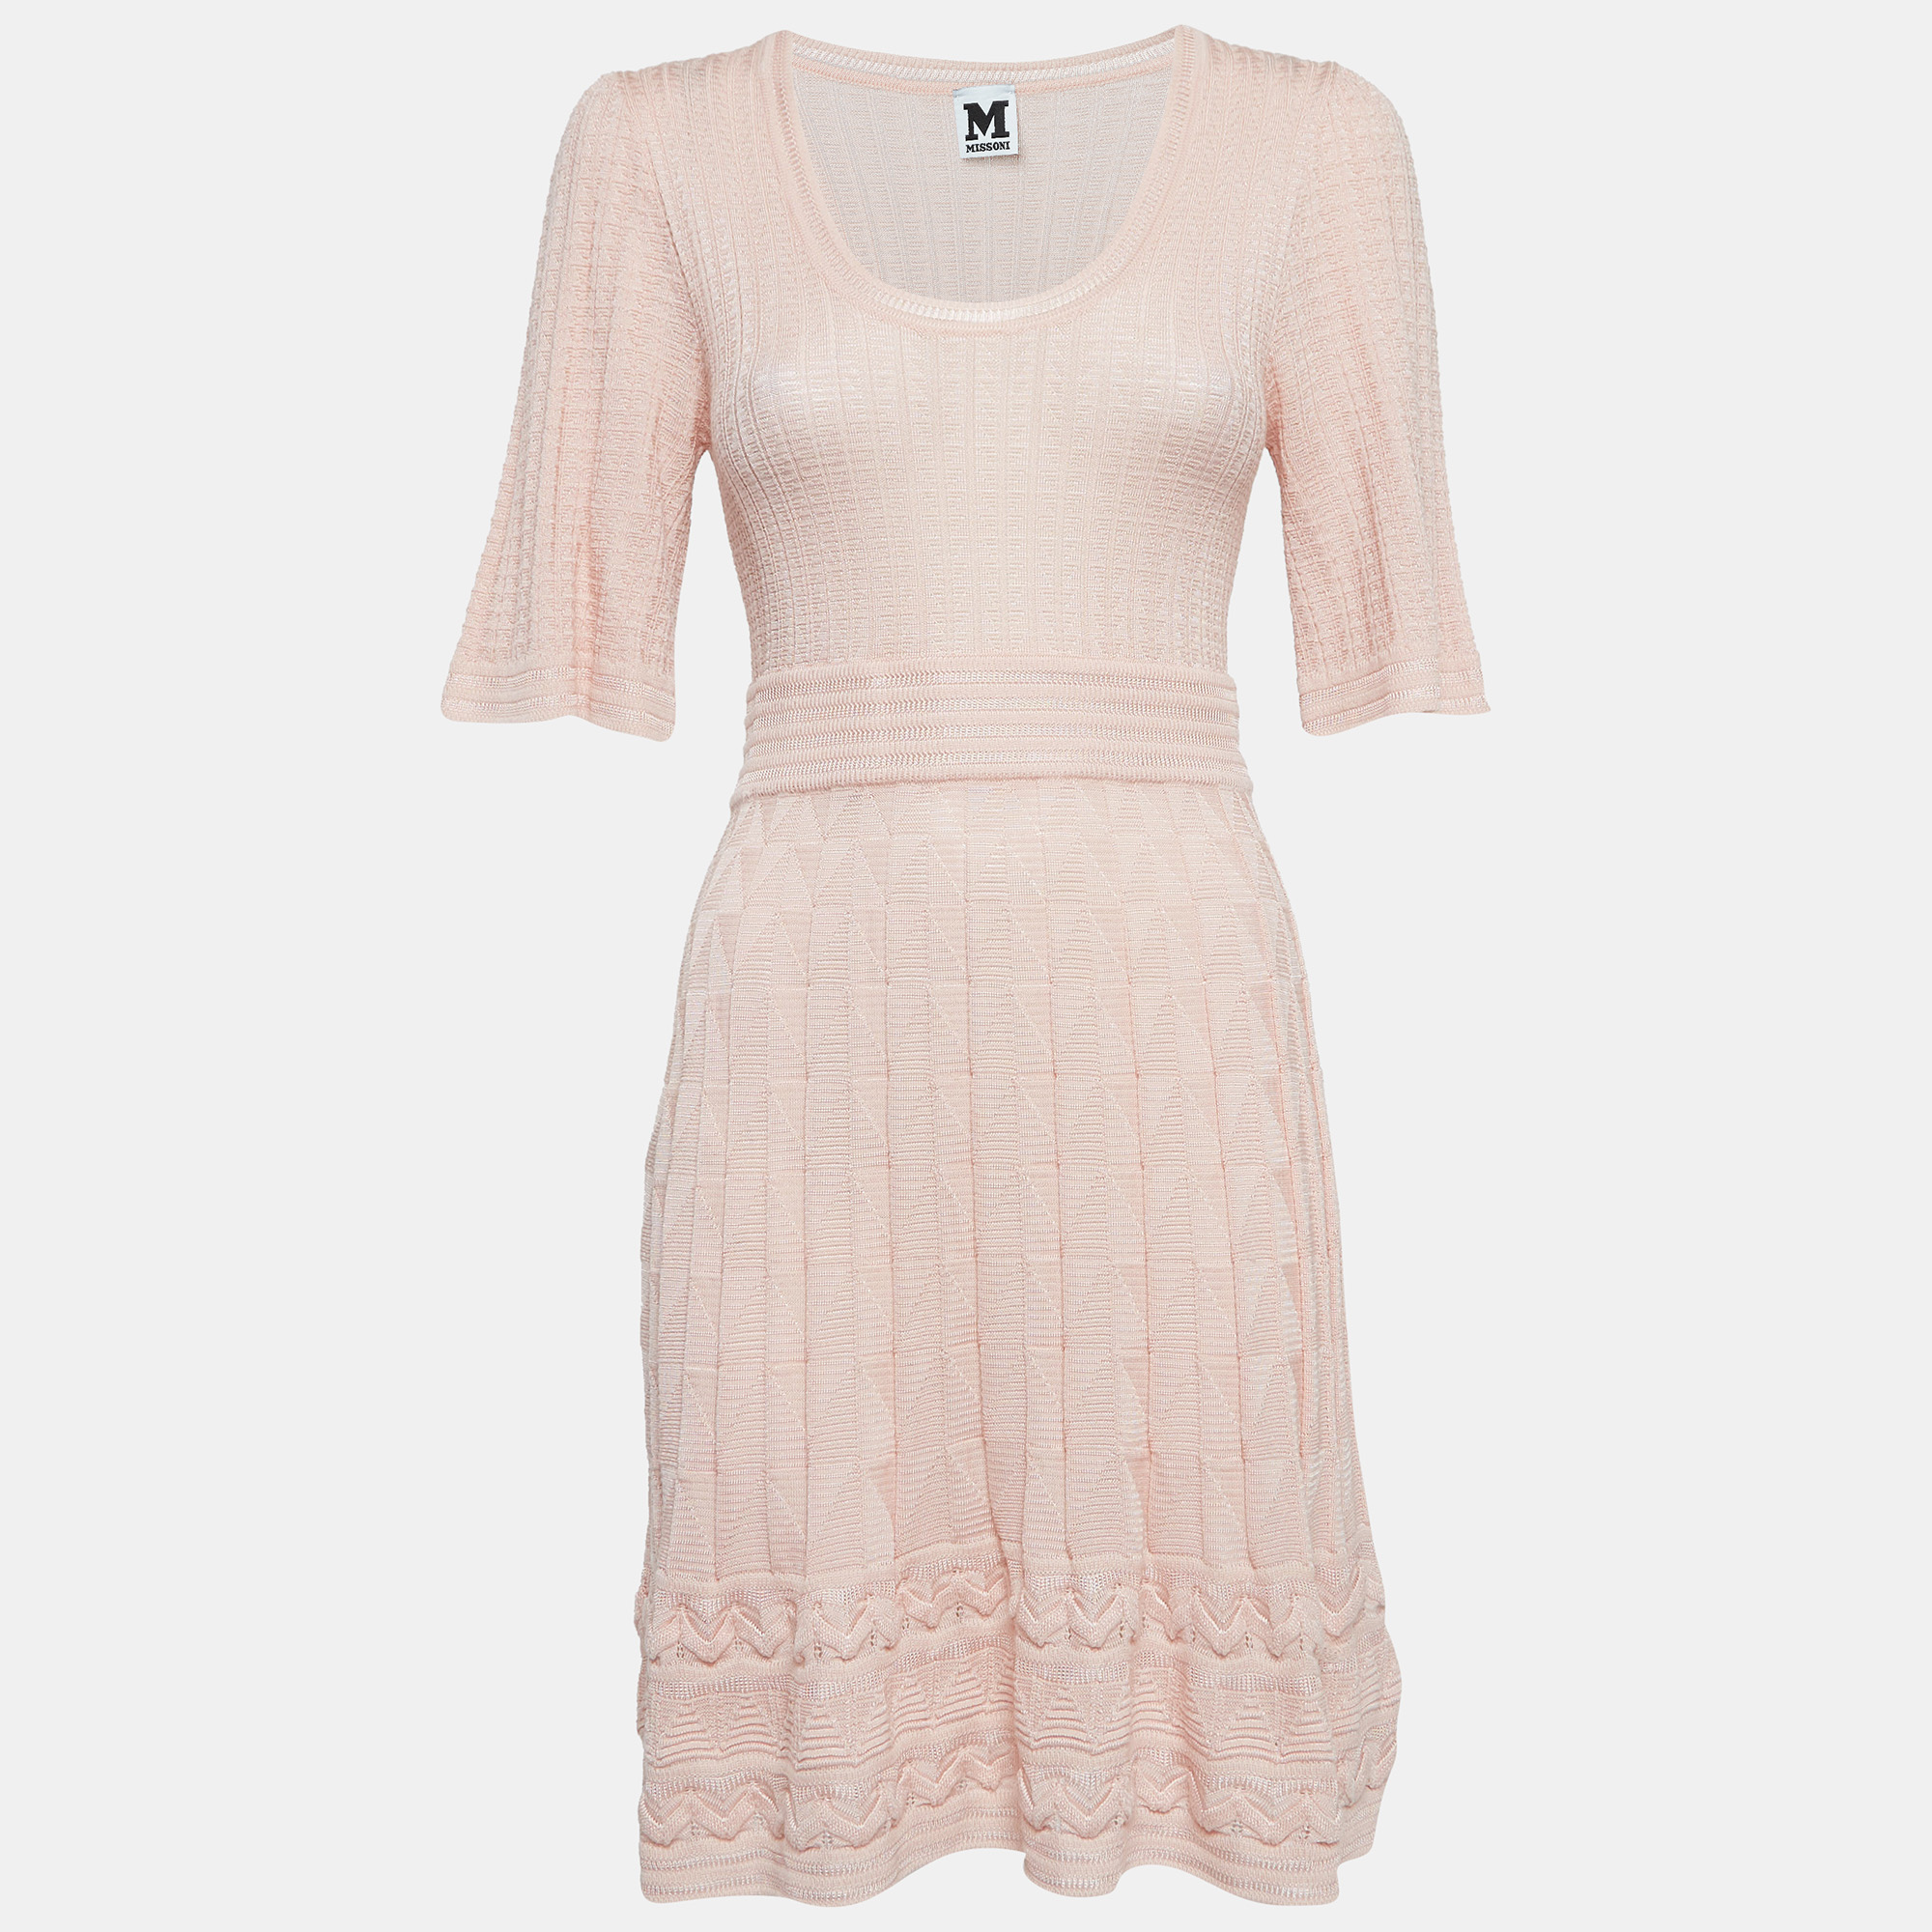 M missoni pink patterned knit short dress s